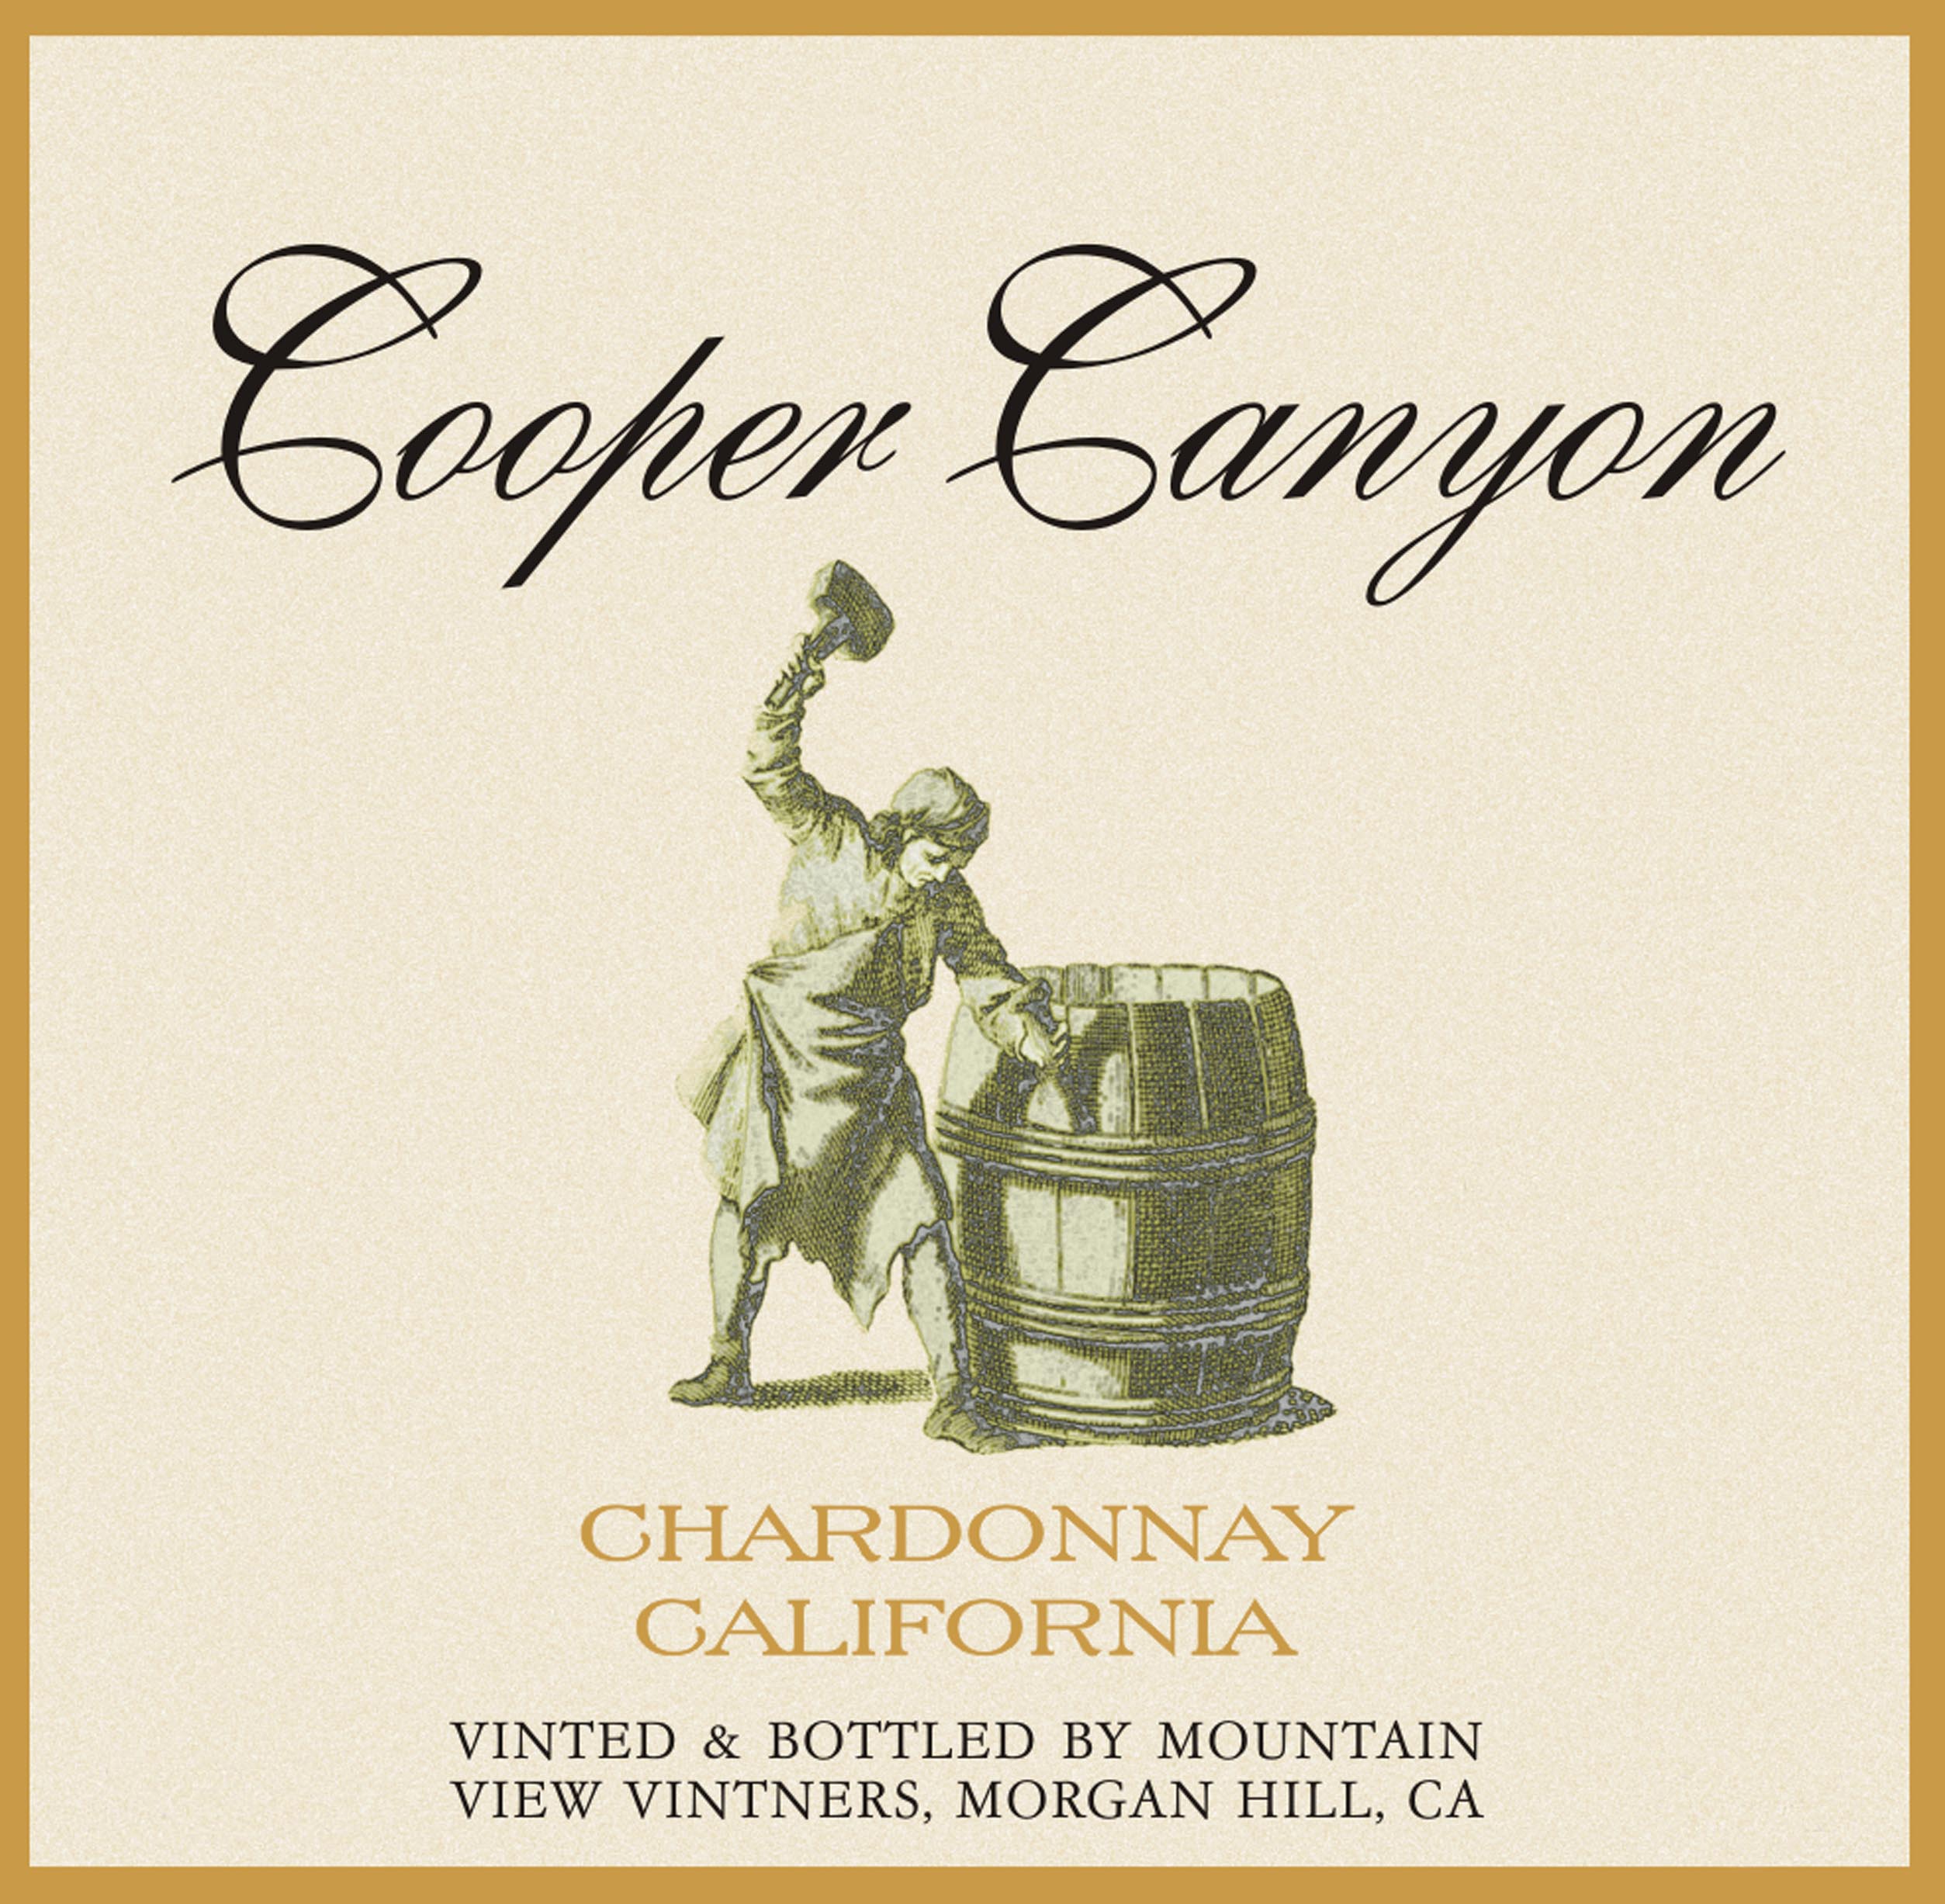 Cooper Canyon - Chardonnay label